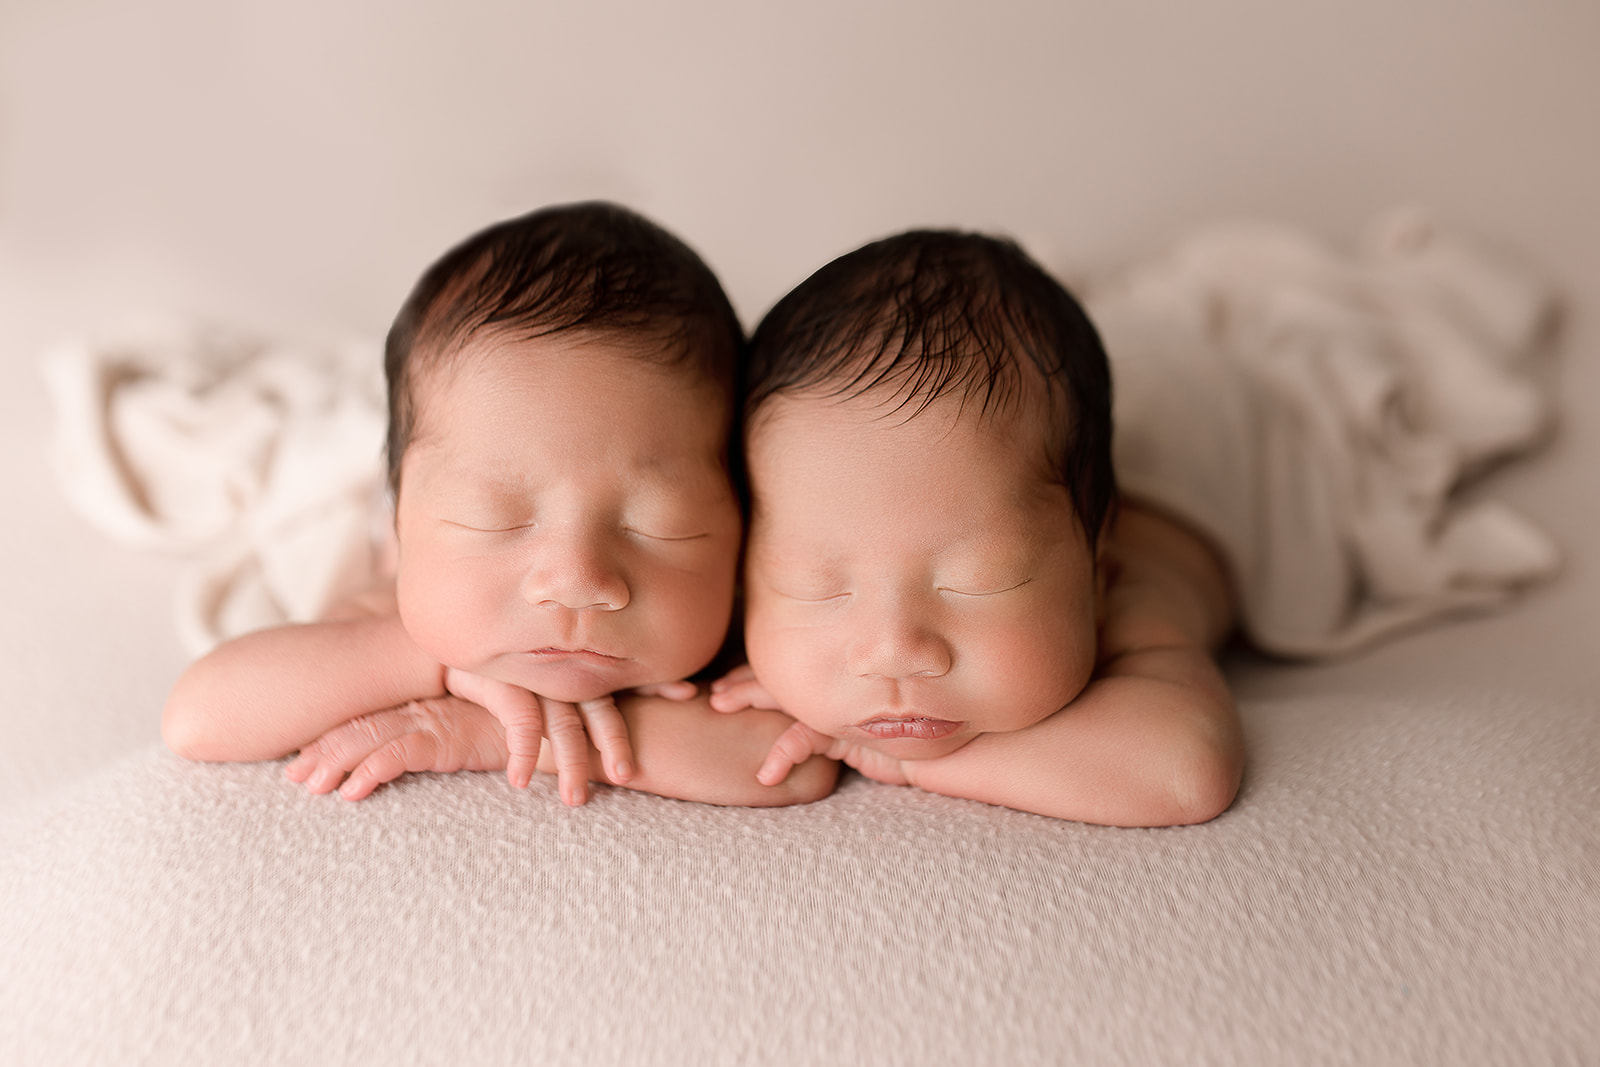 identical newborn twins side by side